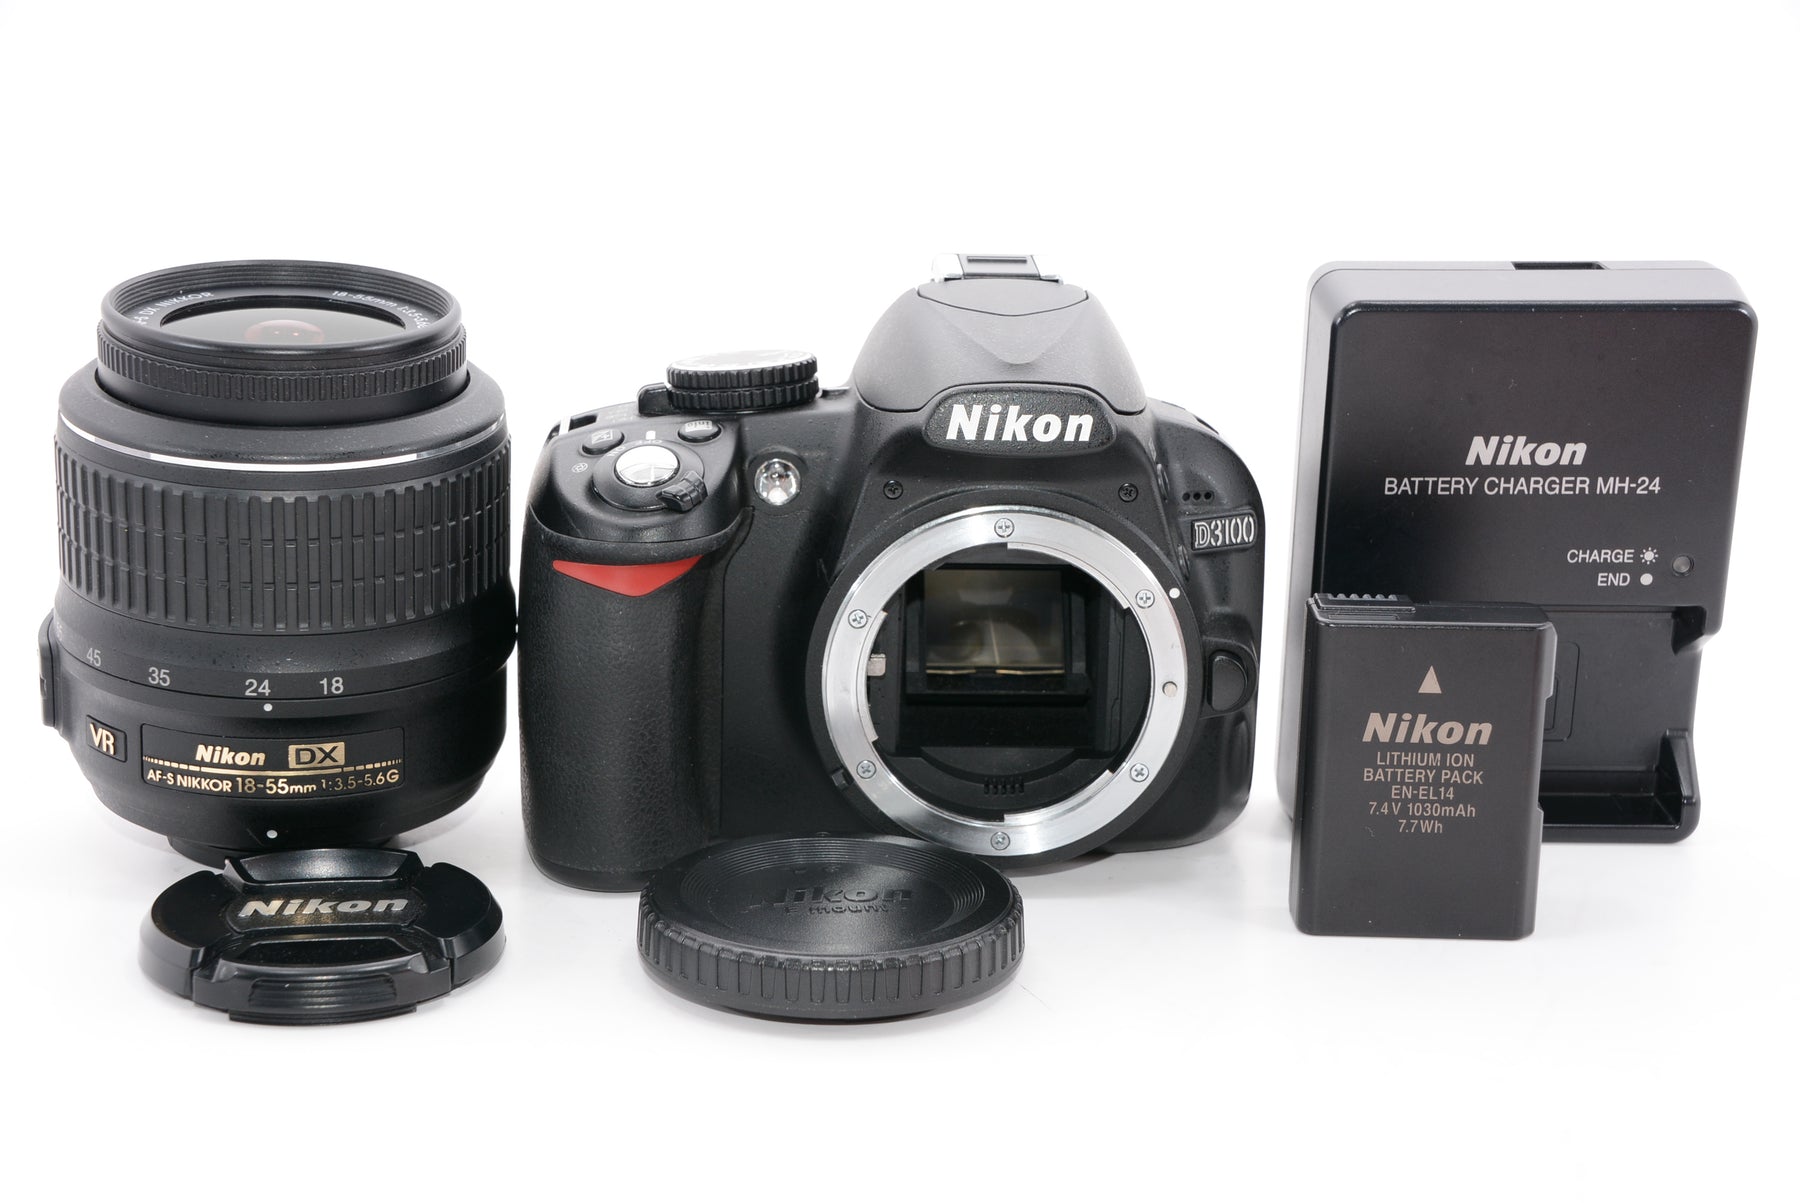 NIKON D3100 デジタル一眼レフカメラ